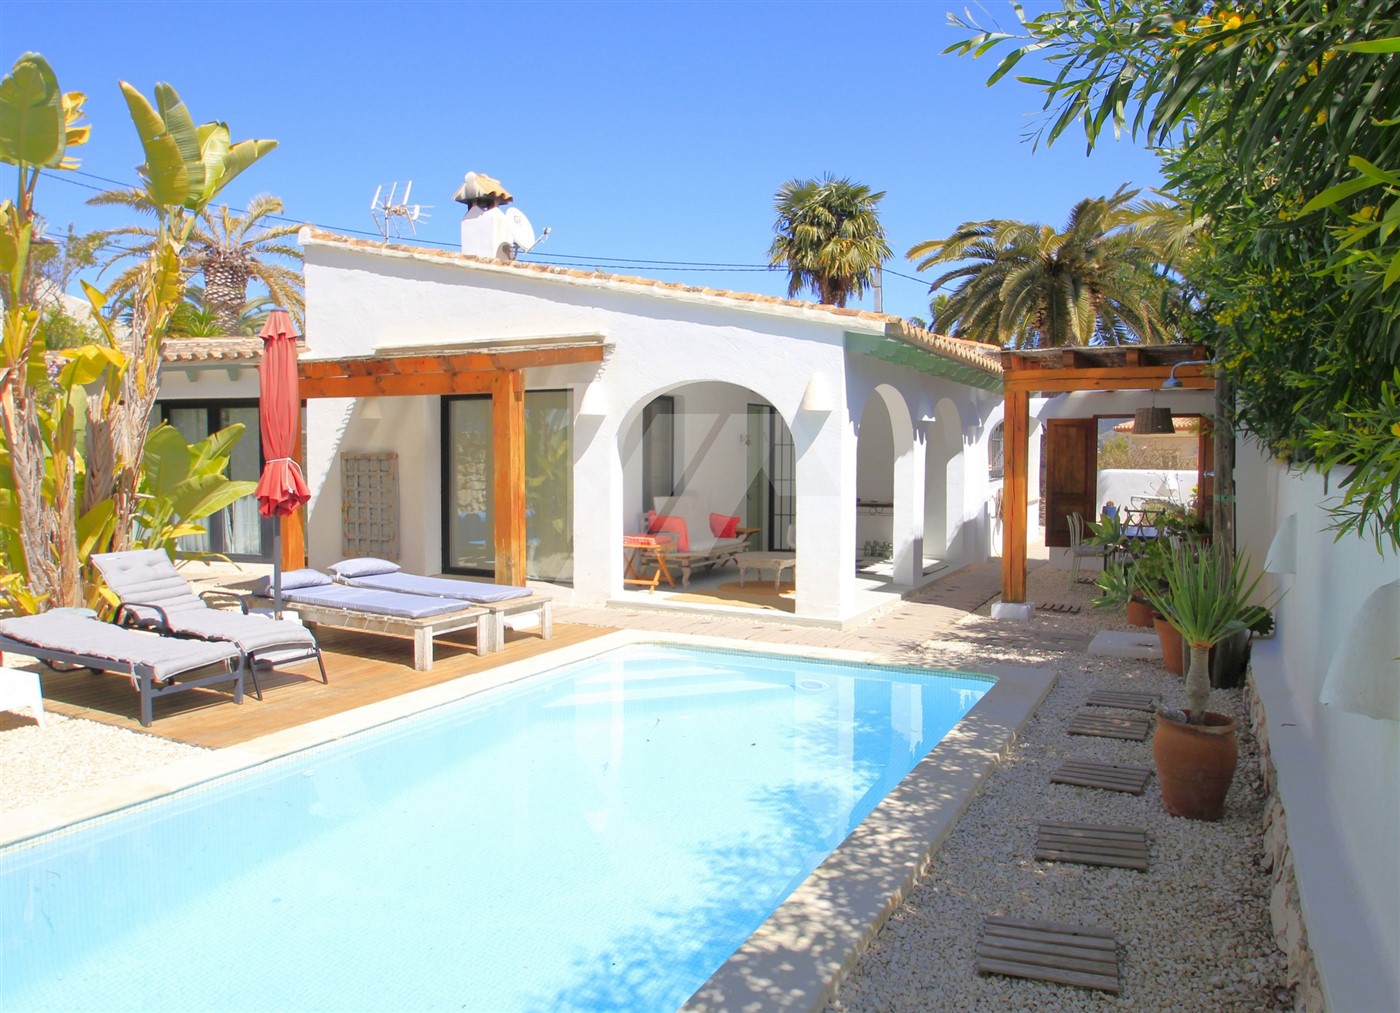 Ibizaanse stijl villa te koop in Moraira, Costa Blanca, Spanje.